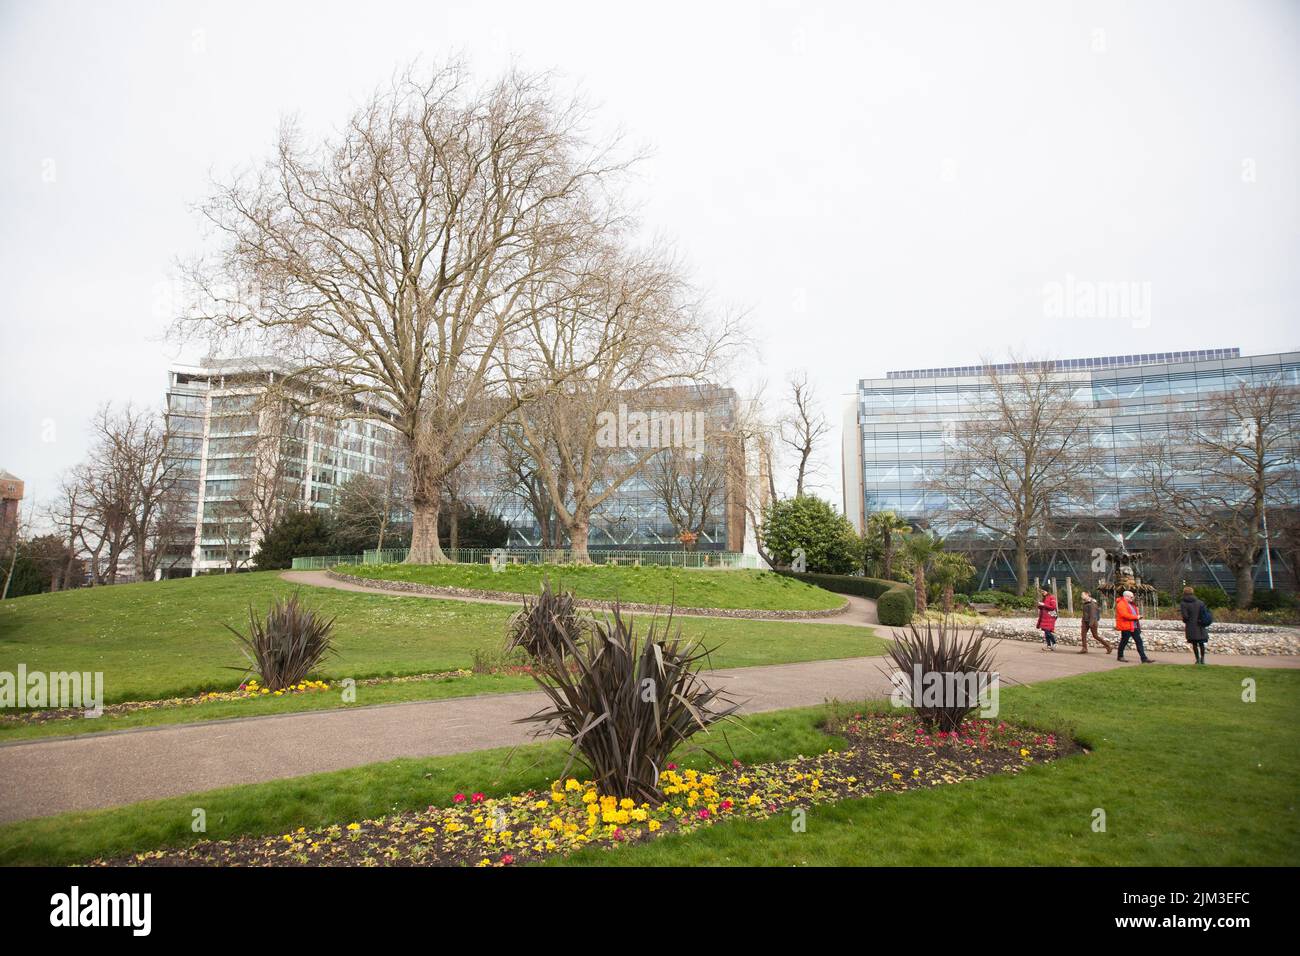 Forbury Gardens, Reading, Berkshire in the UK Stock Photo